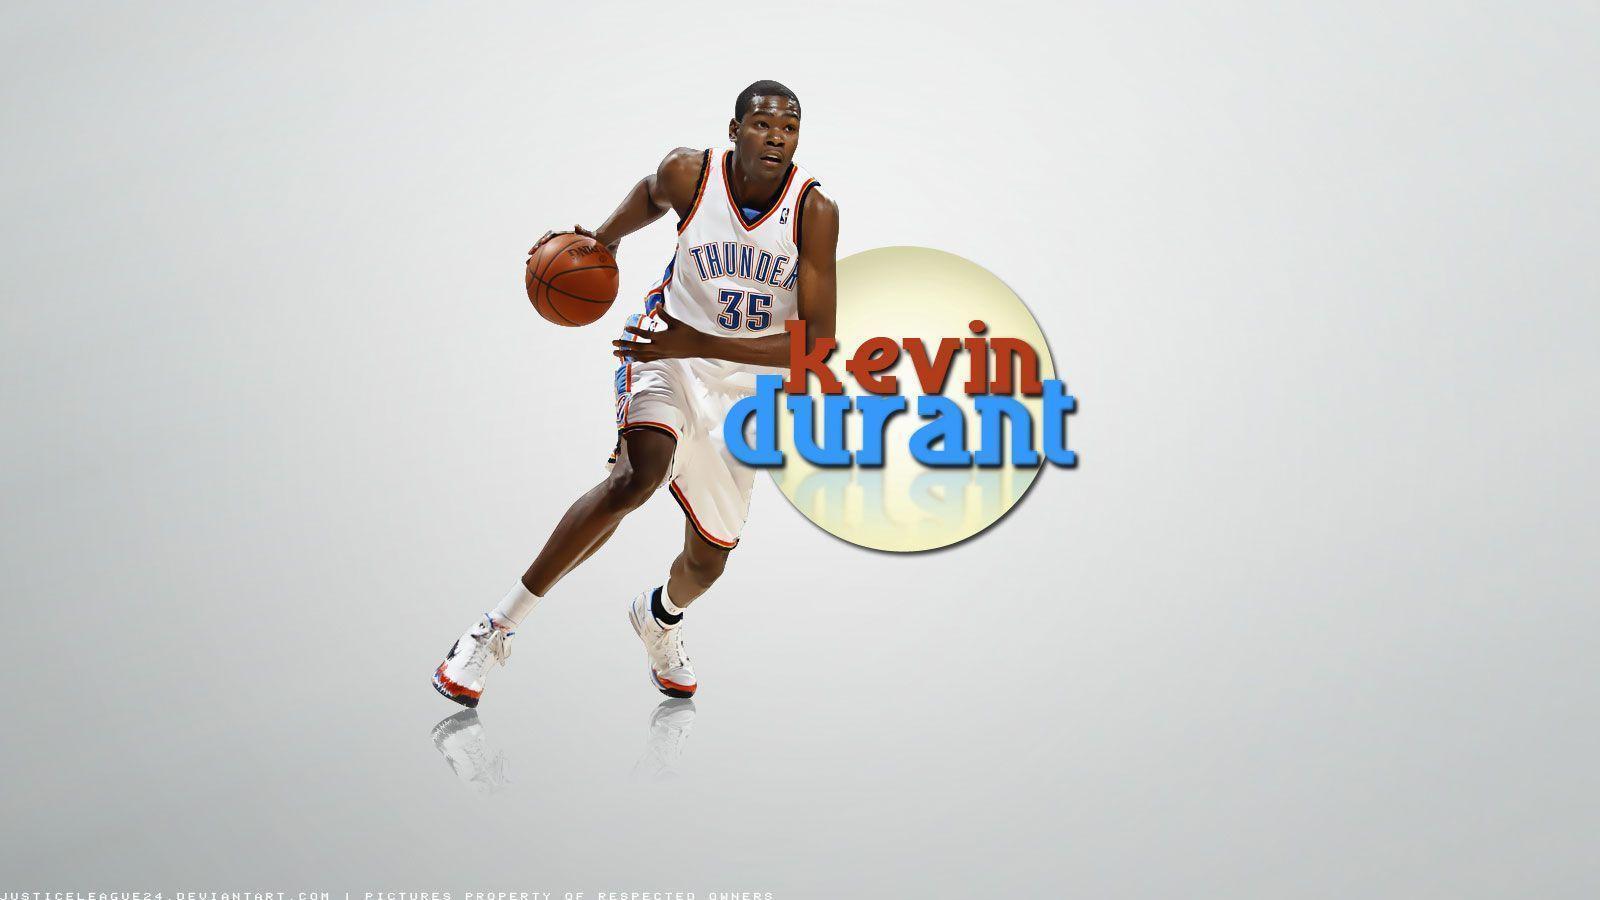 Kevin Durant Wallpaper 1600×900 Wallpaper. Basketball Wallpaper